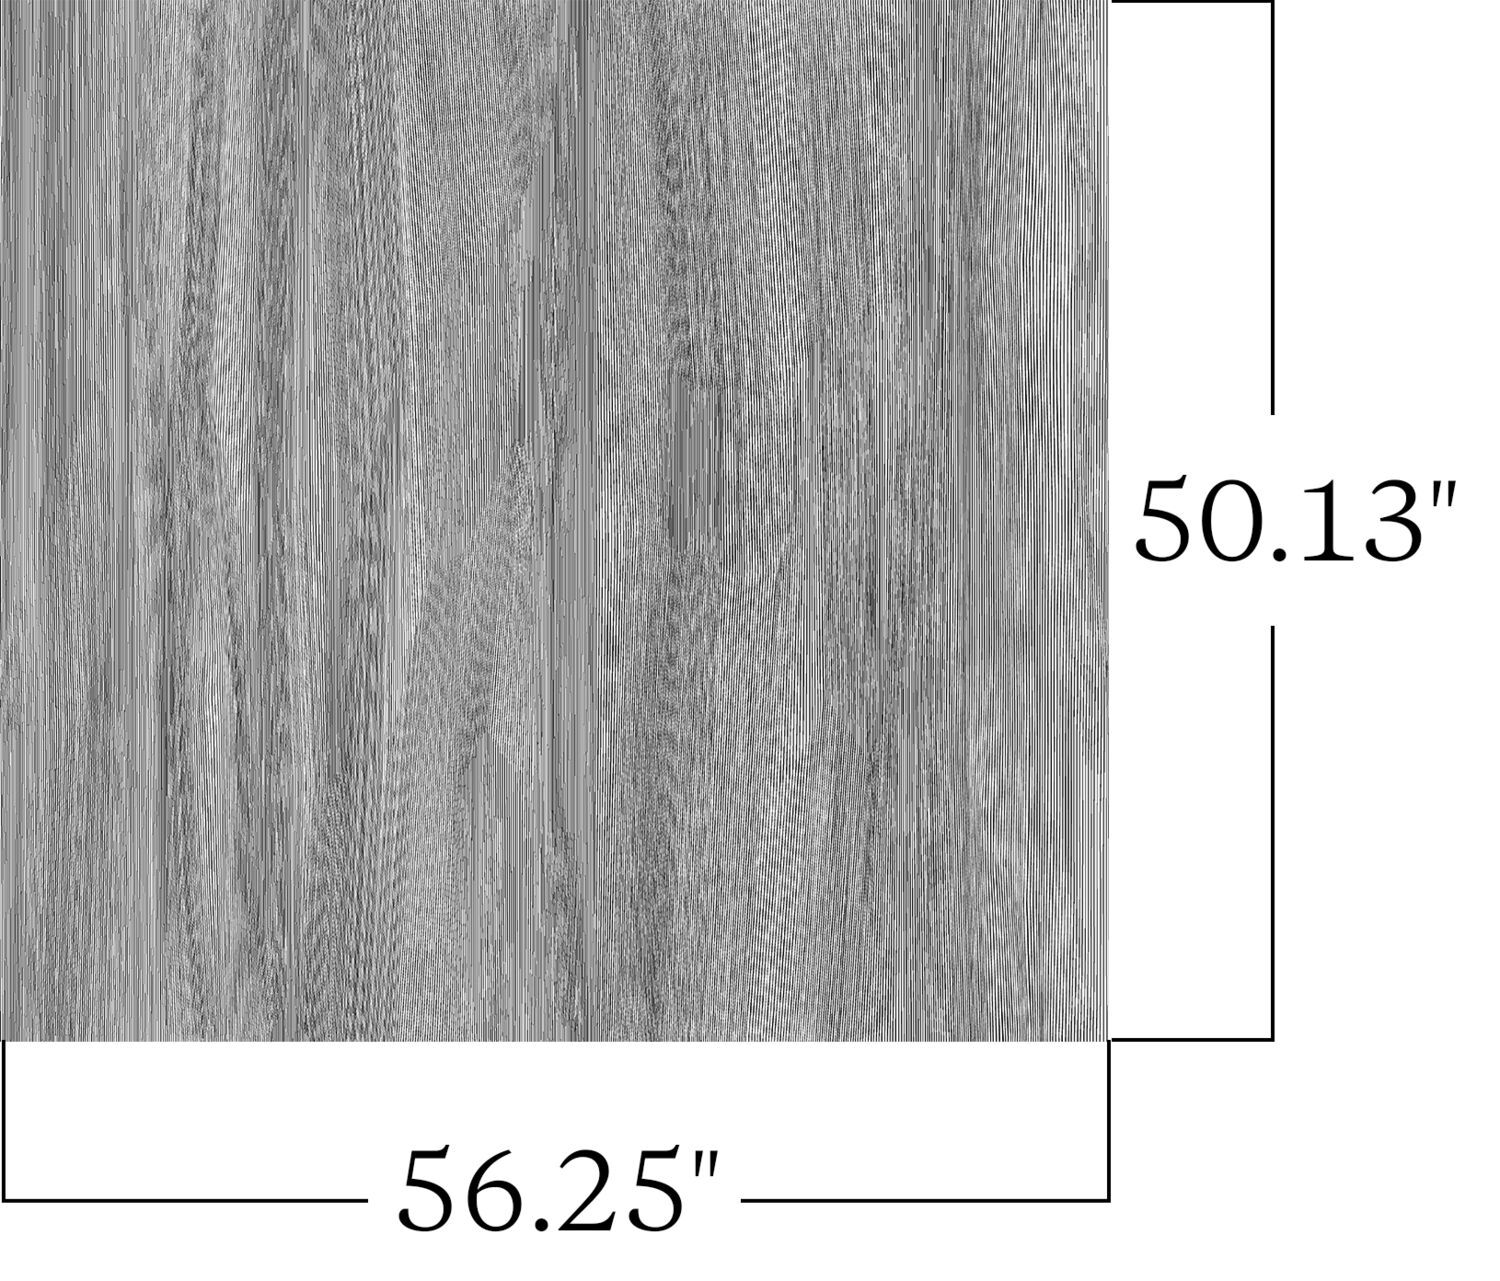 Juxtapose - Lumber - 7020 - 05 Pattern Repeat Image